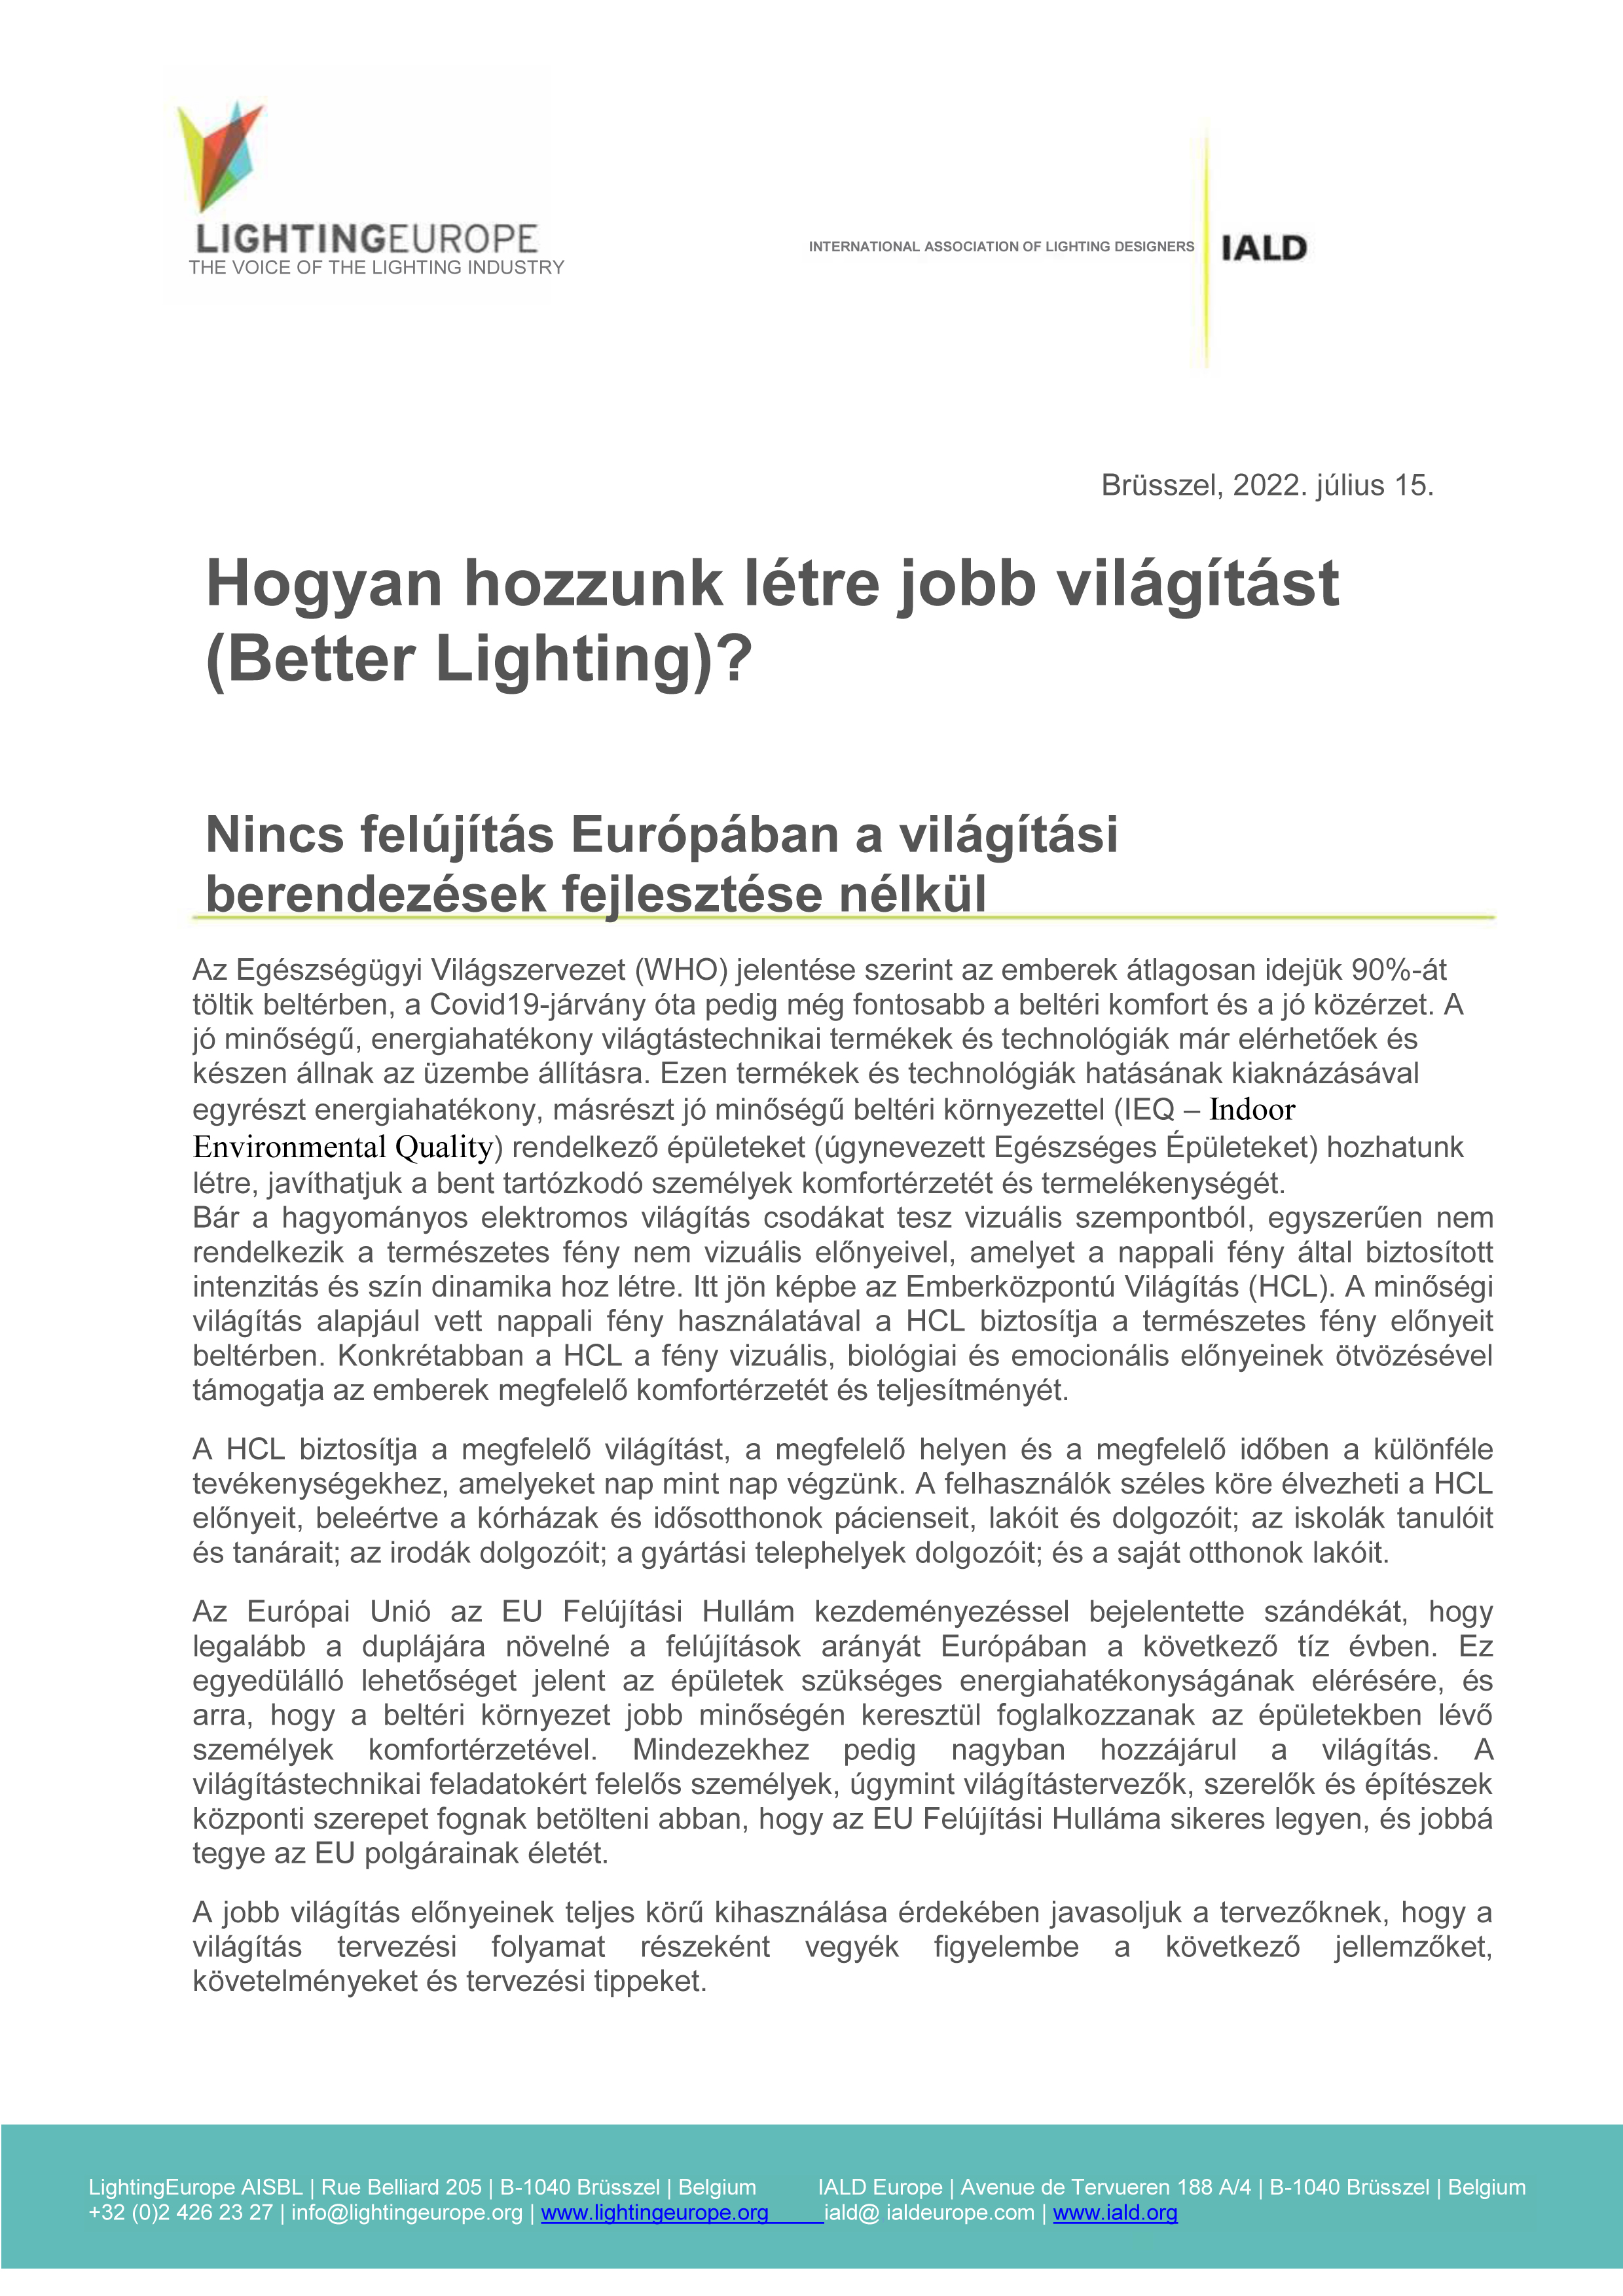 lightingeurope_iald_position_paper_on_better_lighting_20220715_hun-1.jpg